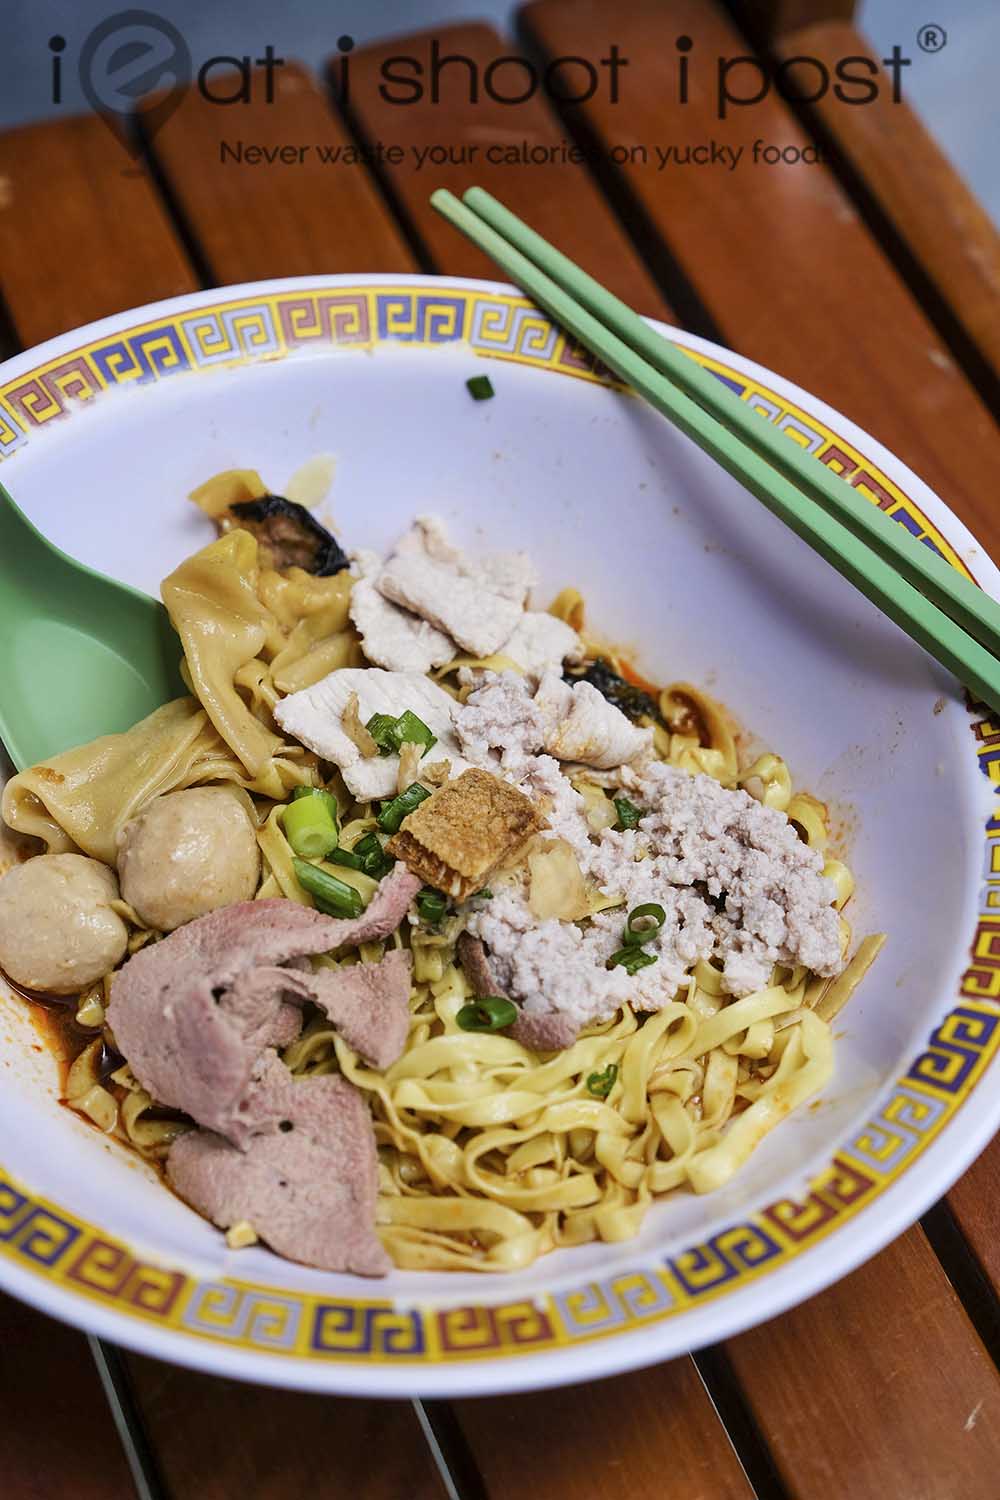 Hillstreet Tai Hwa Pork Noodles: Everybody Queue up! - ieatishootipost